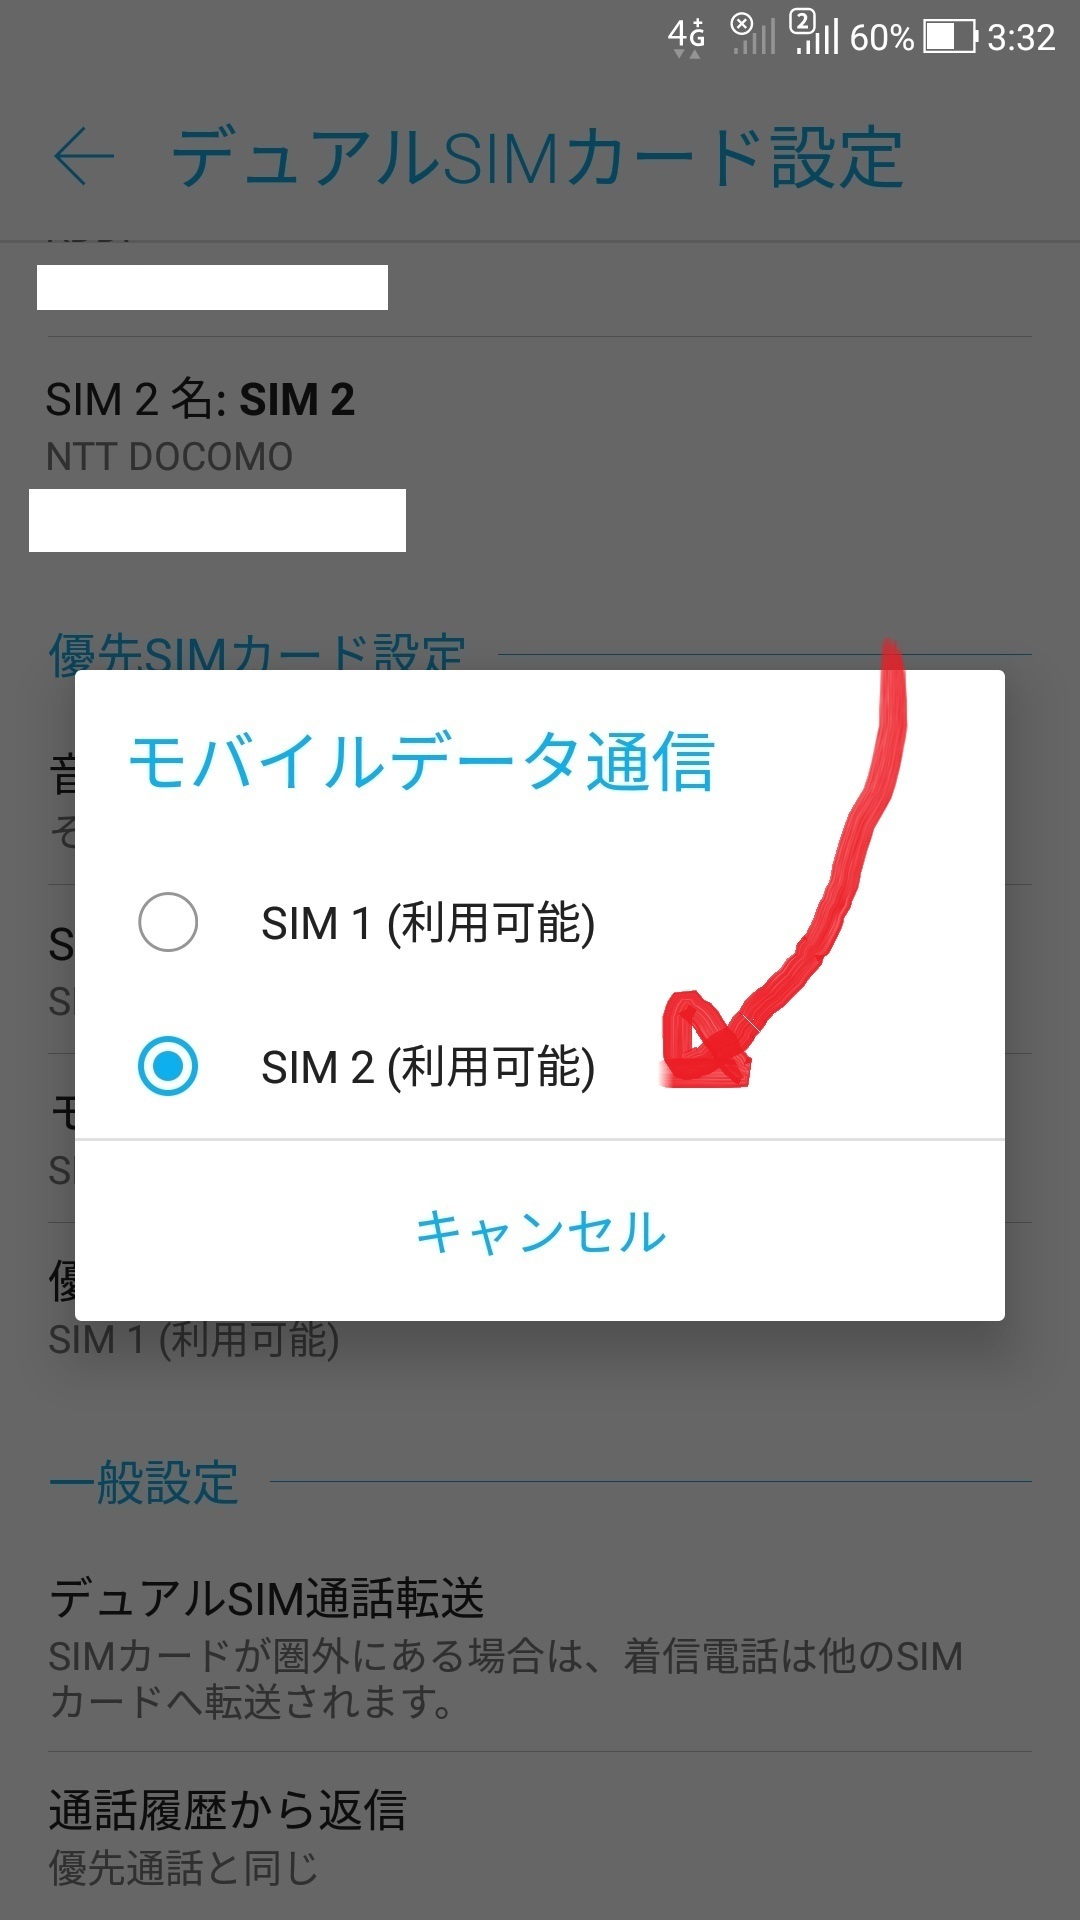 SIM_dual_card_2_line_aeon_mobile_.jpg